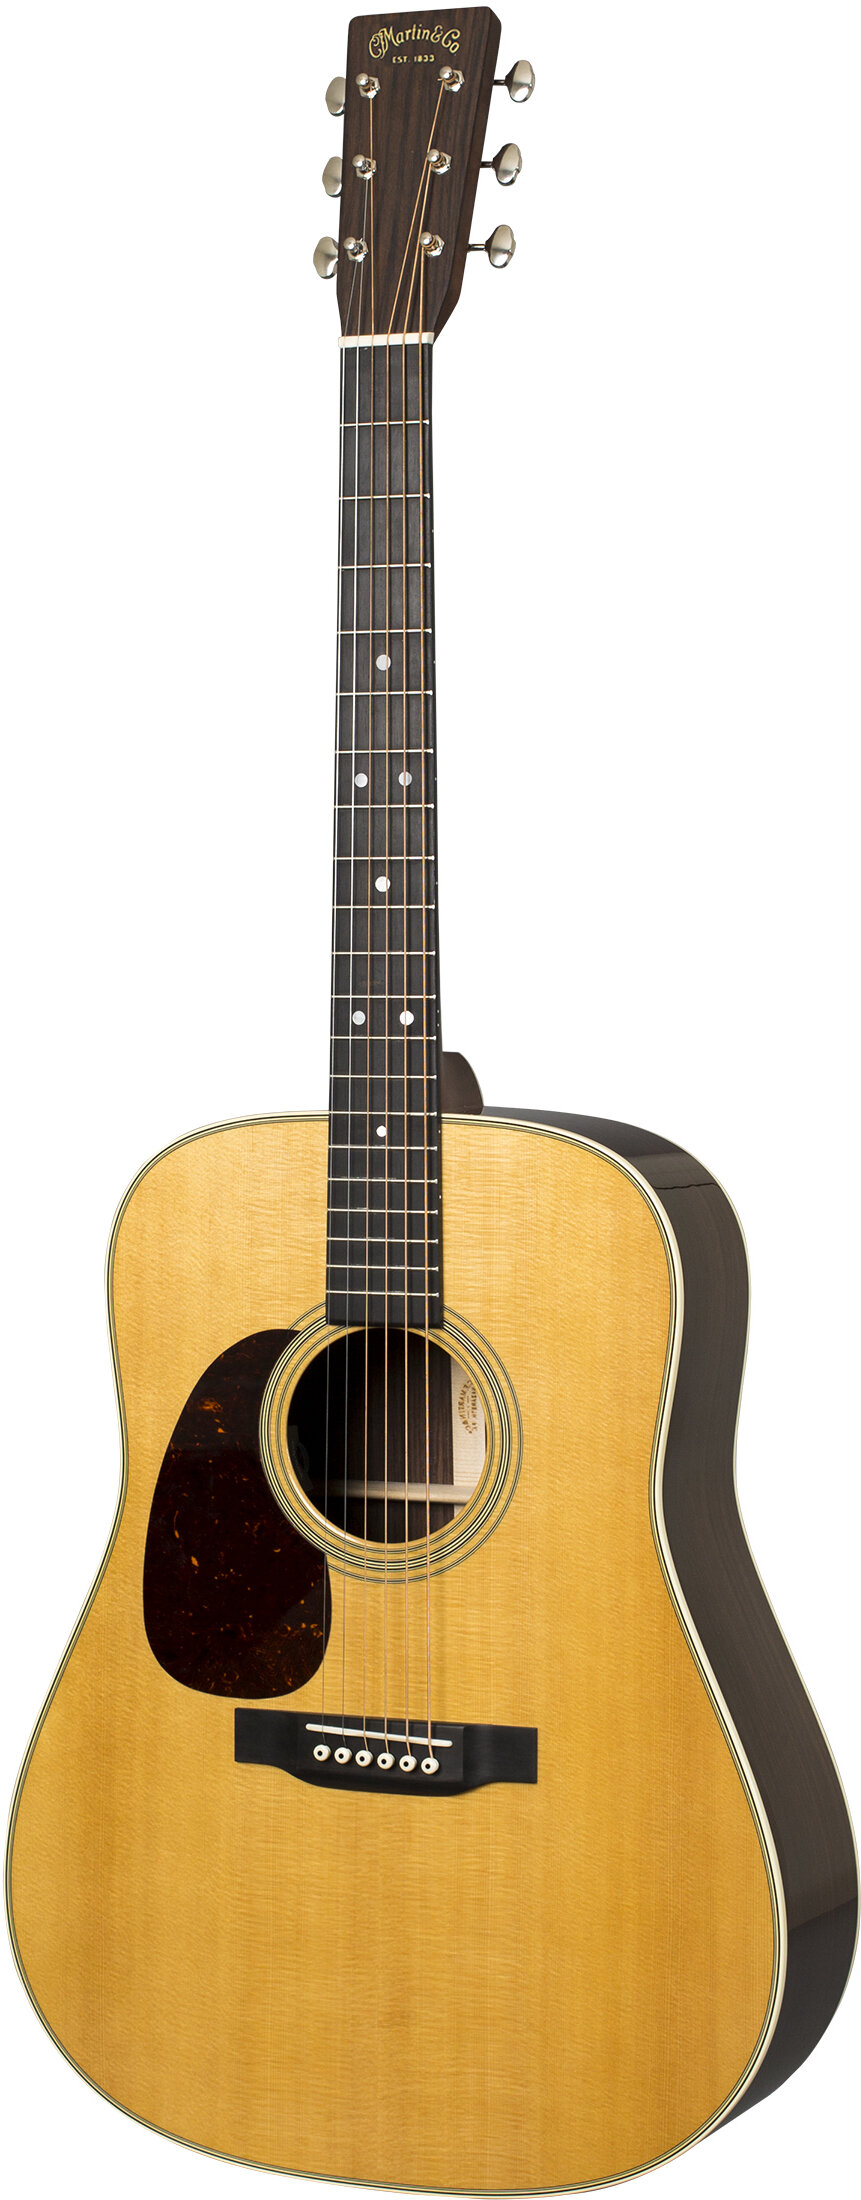 Martin D28 Dreadnought Acoustic Guitar Left Hand -  102017D28L